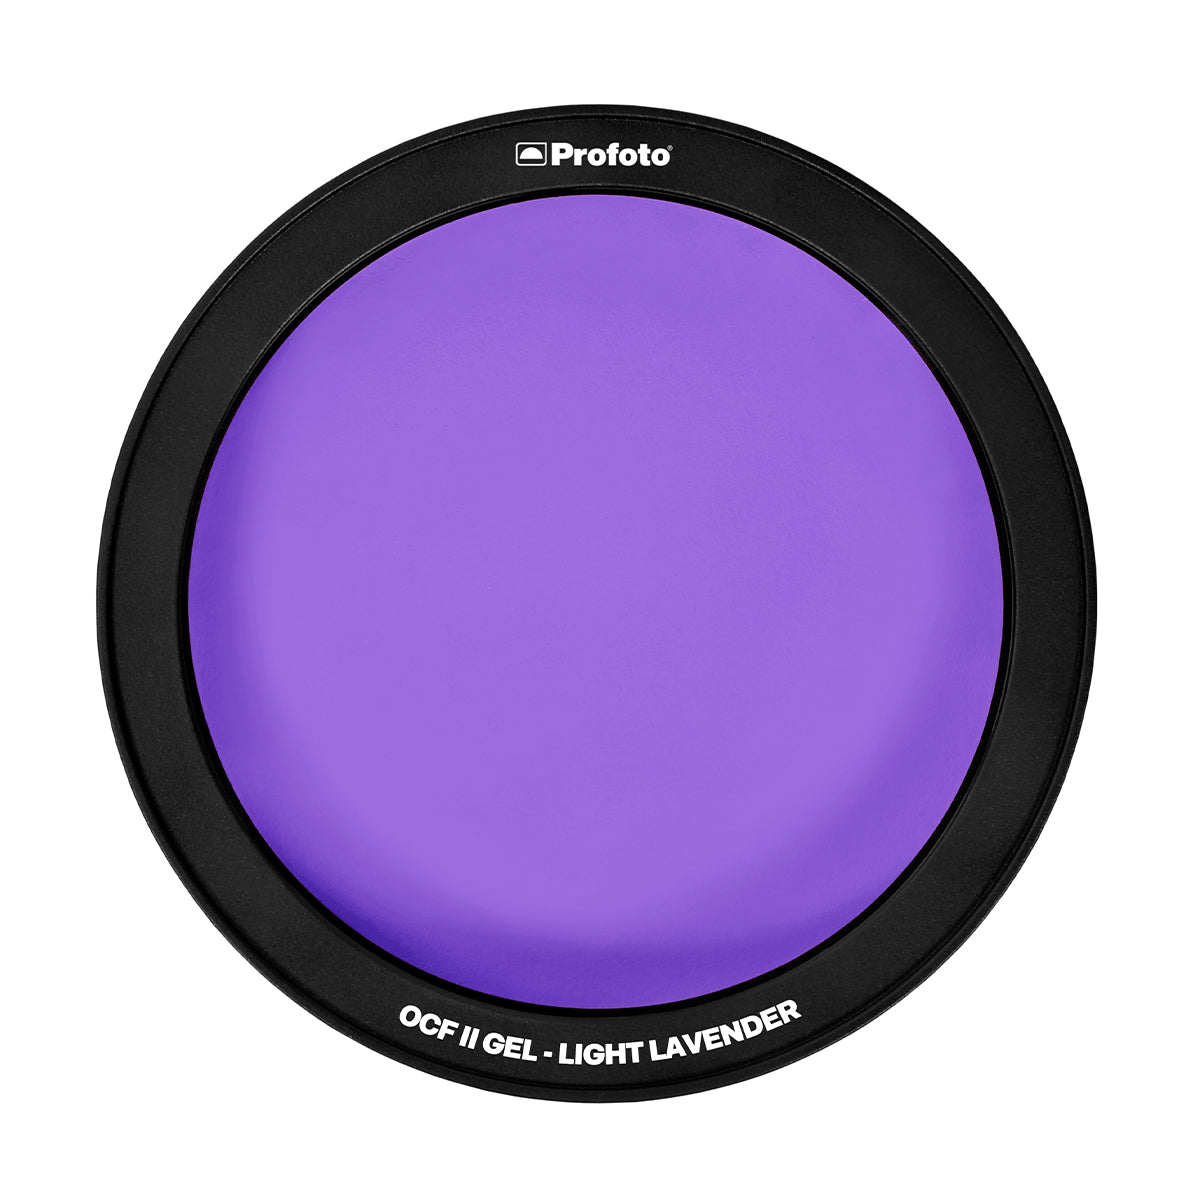 Profoto OCF II Gel - Light Lavender